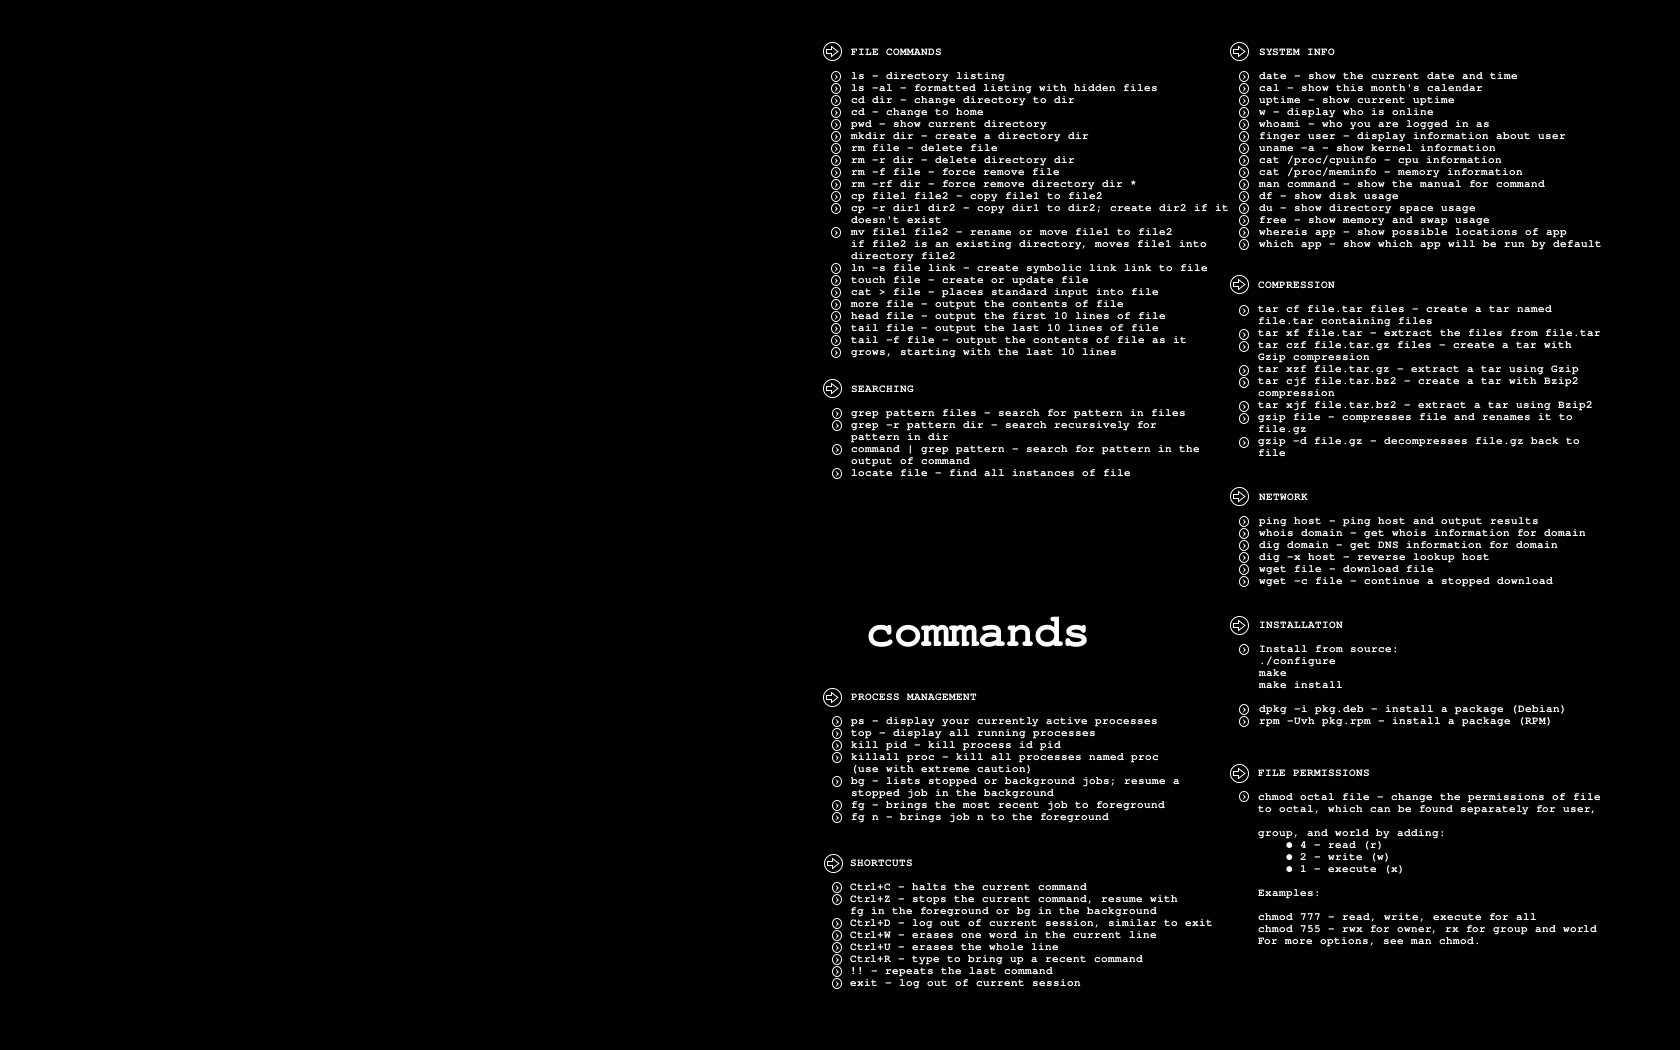 Dir exists. Шпаргалка Linux. Командная строка линукс. Linux Commands Wallpaper. Linux Cheat Sheet Wallpaper.